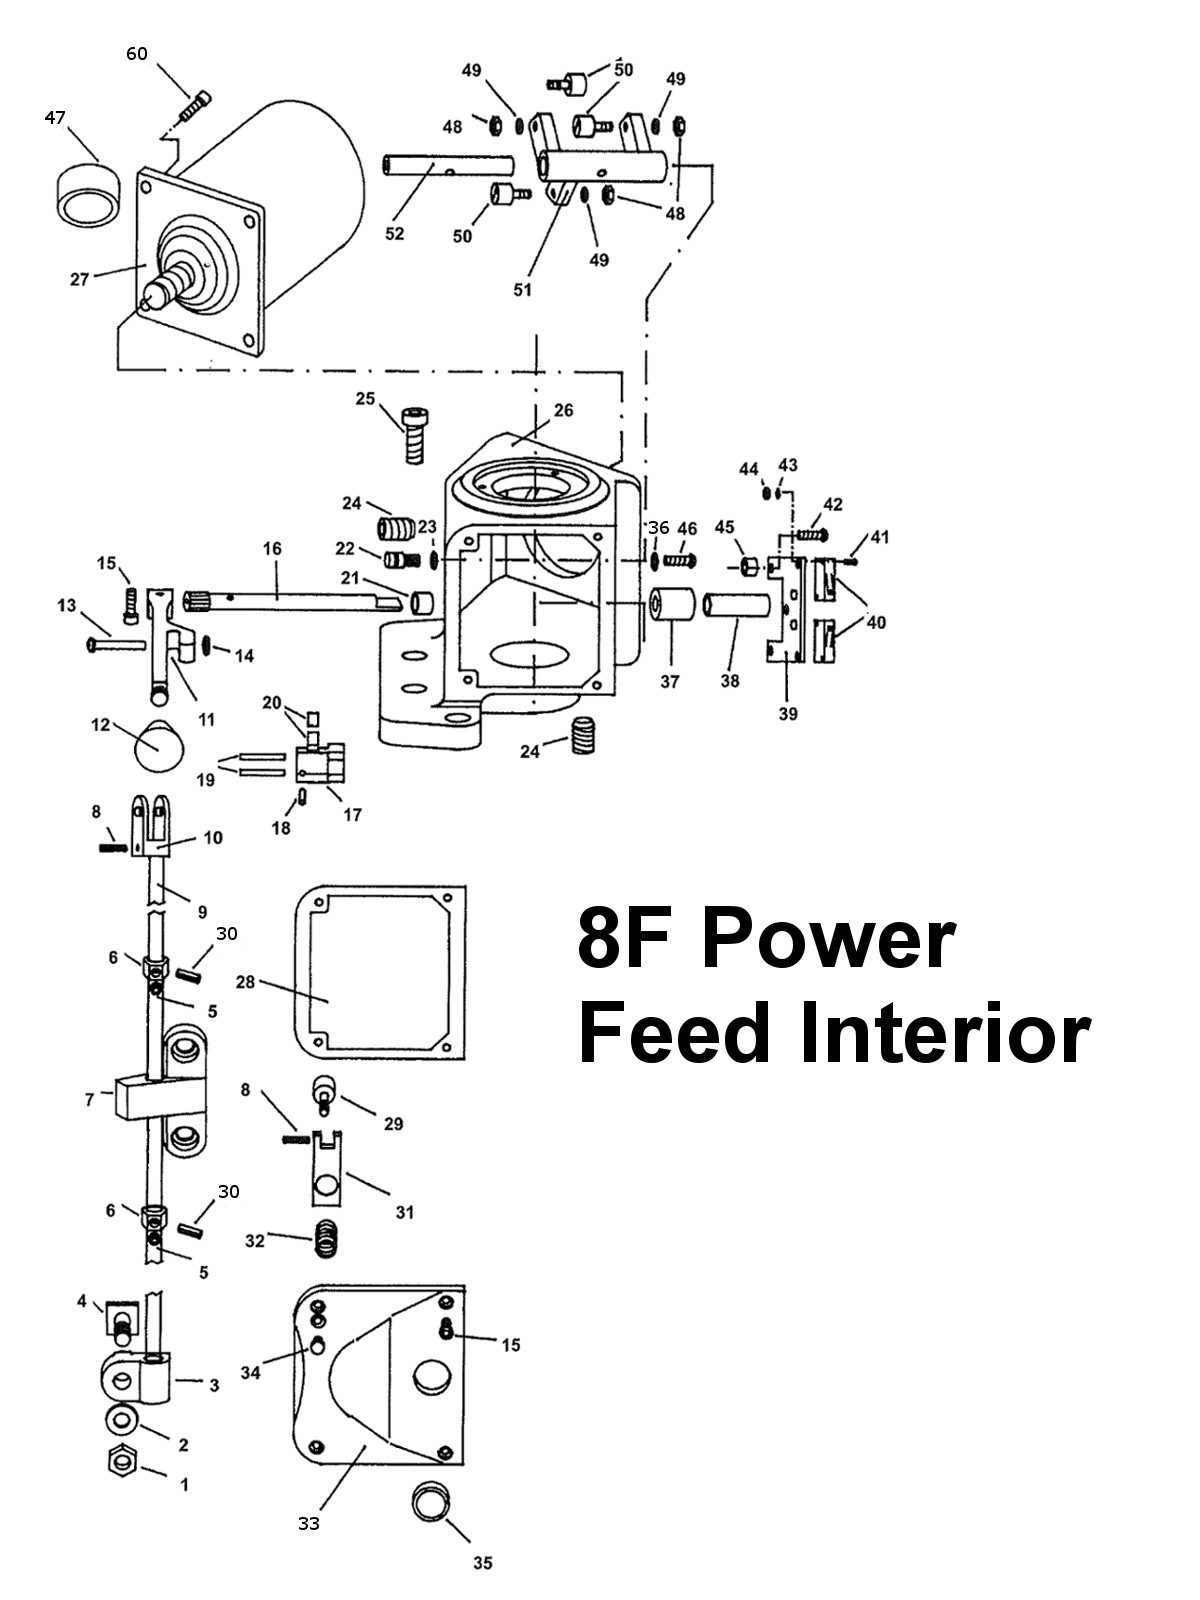 8F Power Feed Interior Breakdown